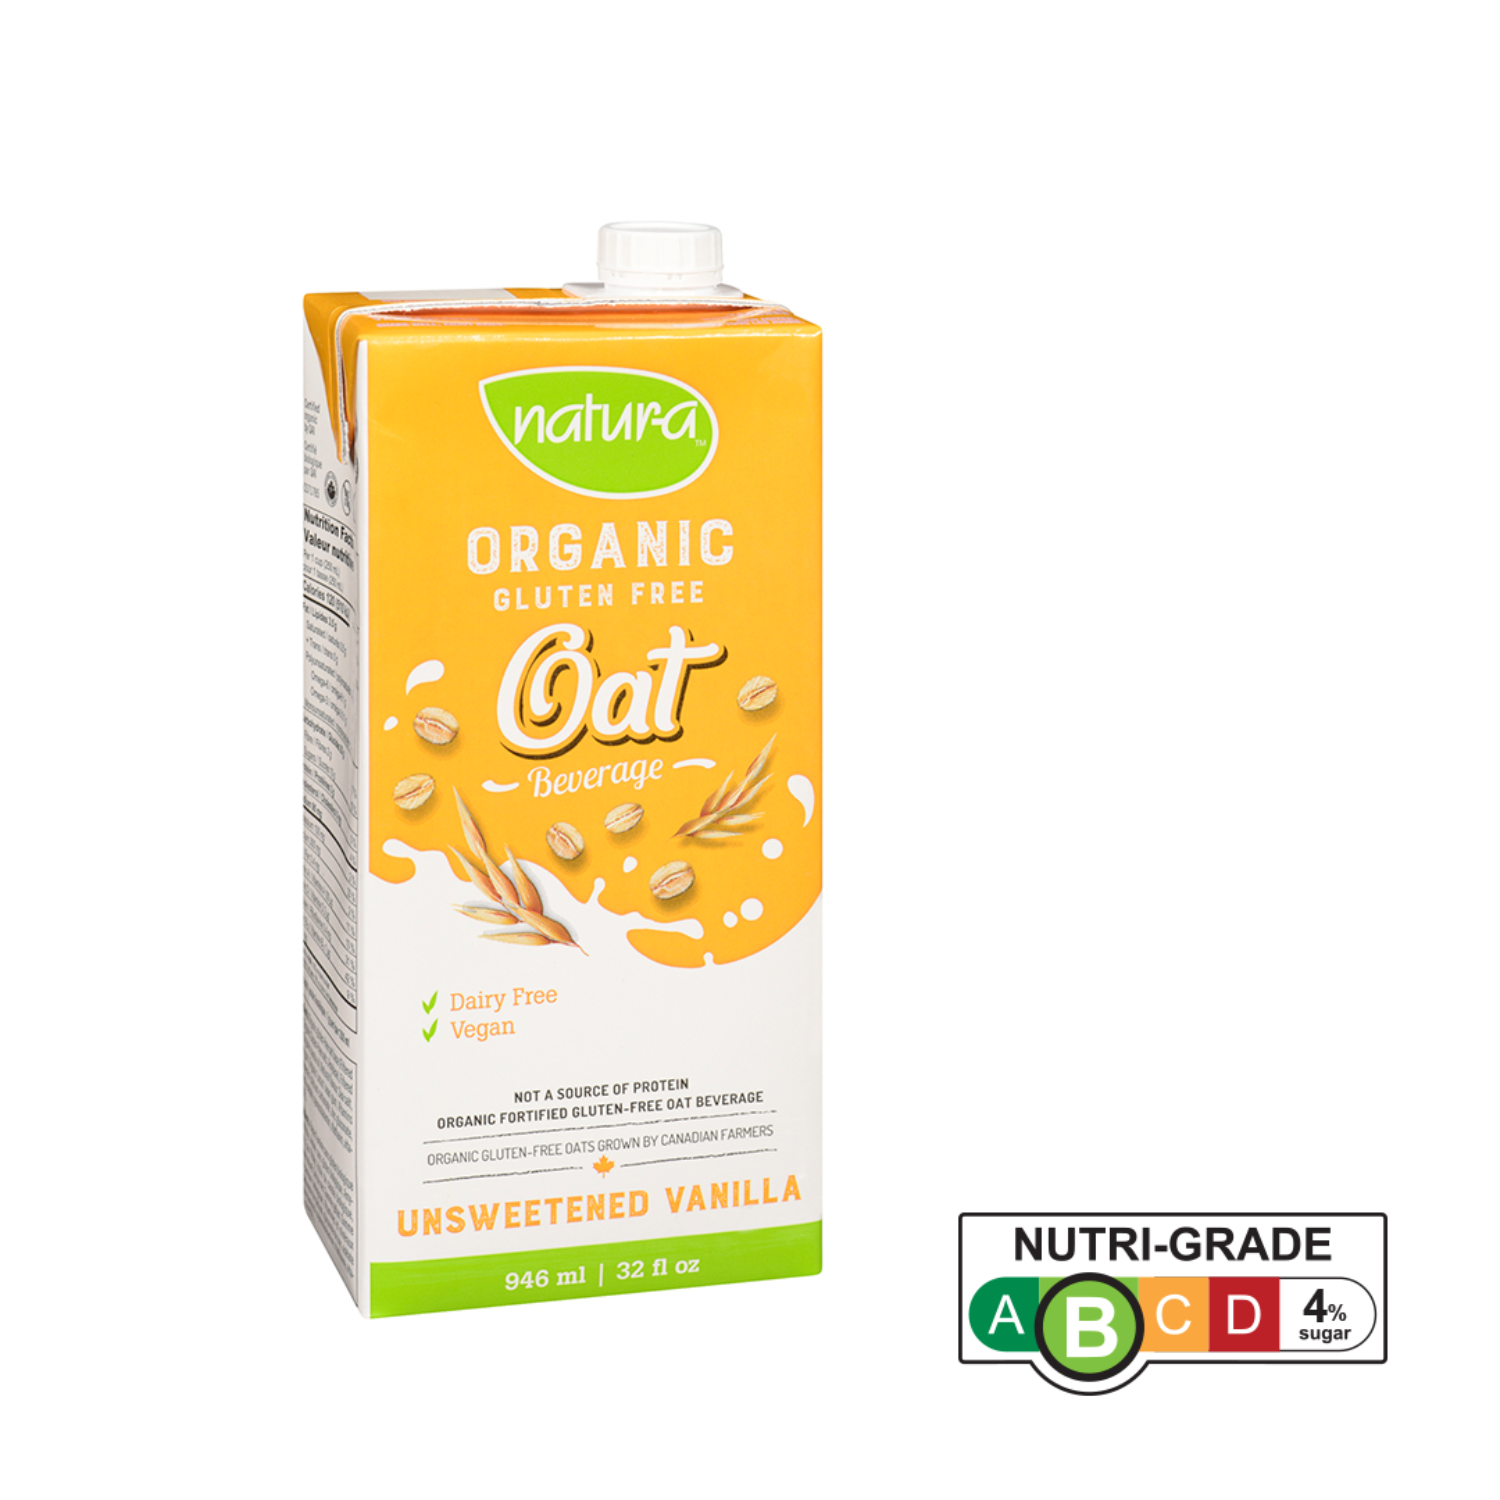 Natur-a Oat Beverage  - Vanilla Unsweetened (Organic), 946 ml. [Exp: 17/06/2023]